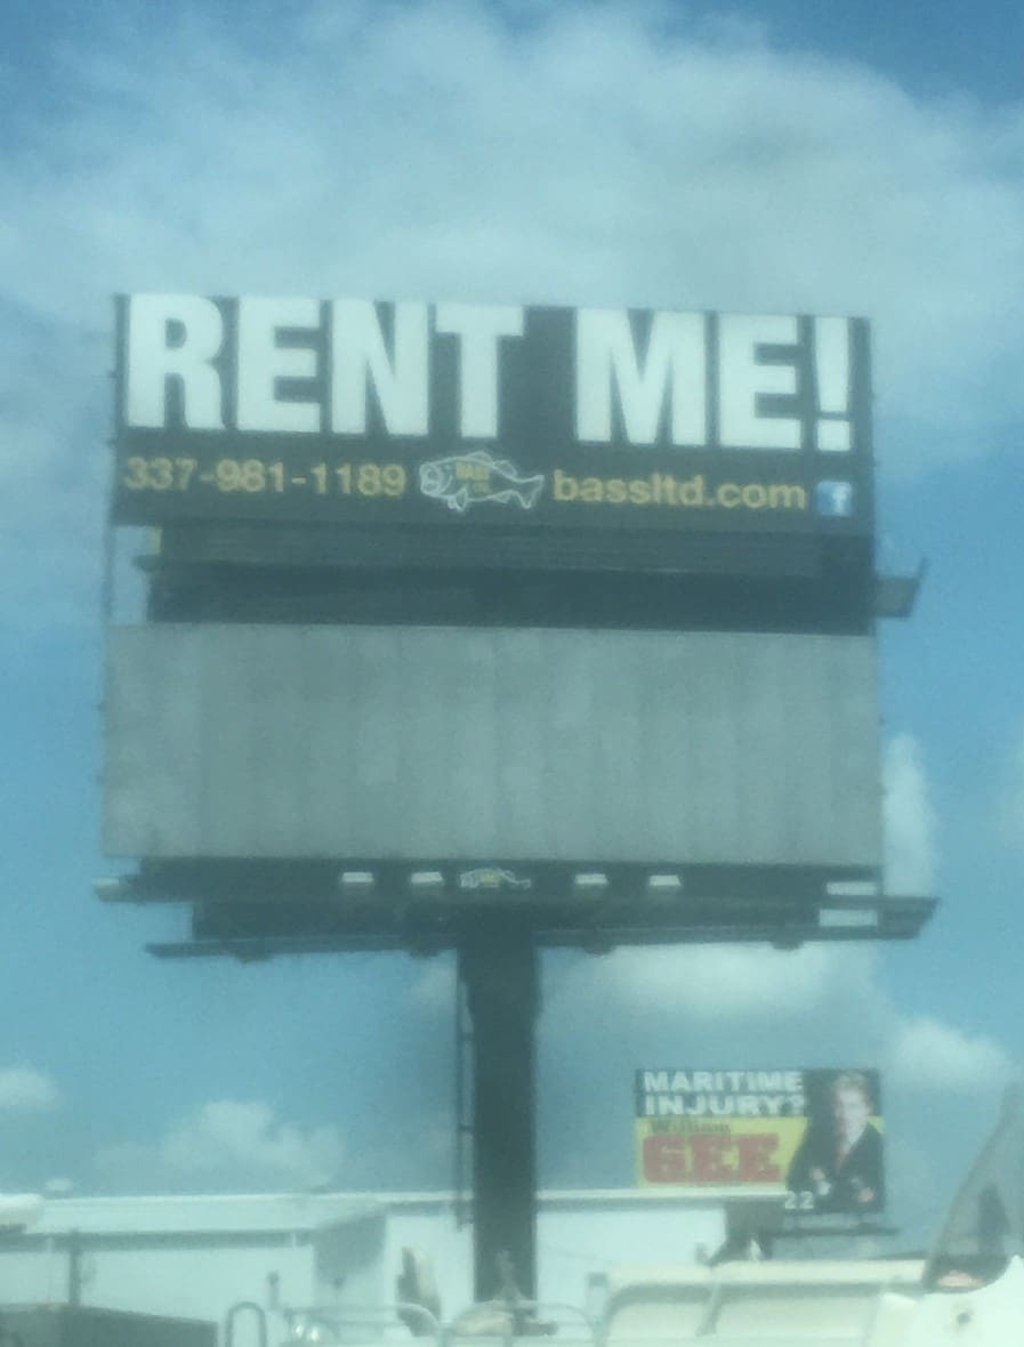 Photo of a billboard in Avery Island